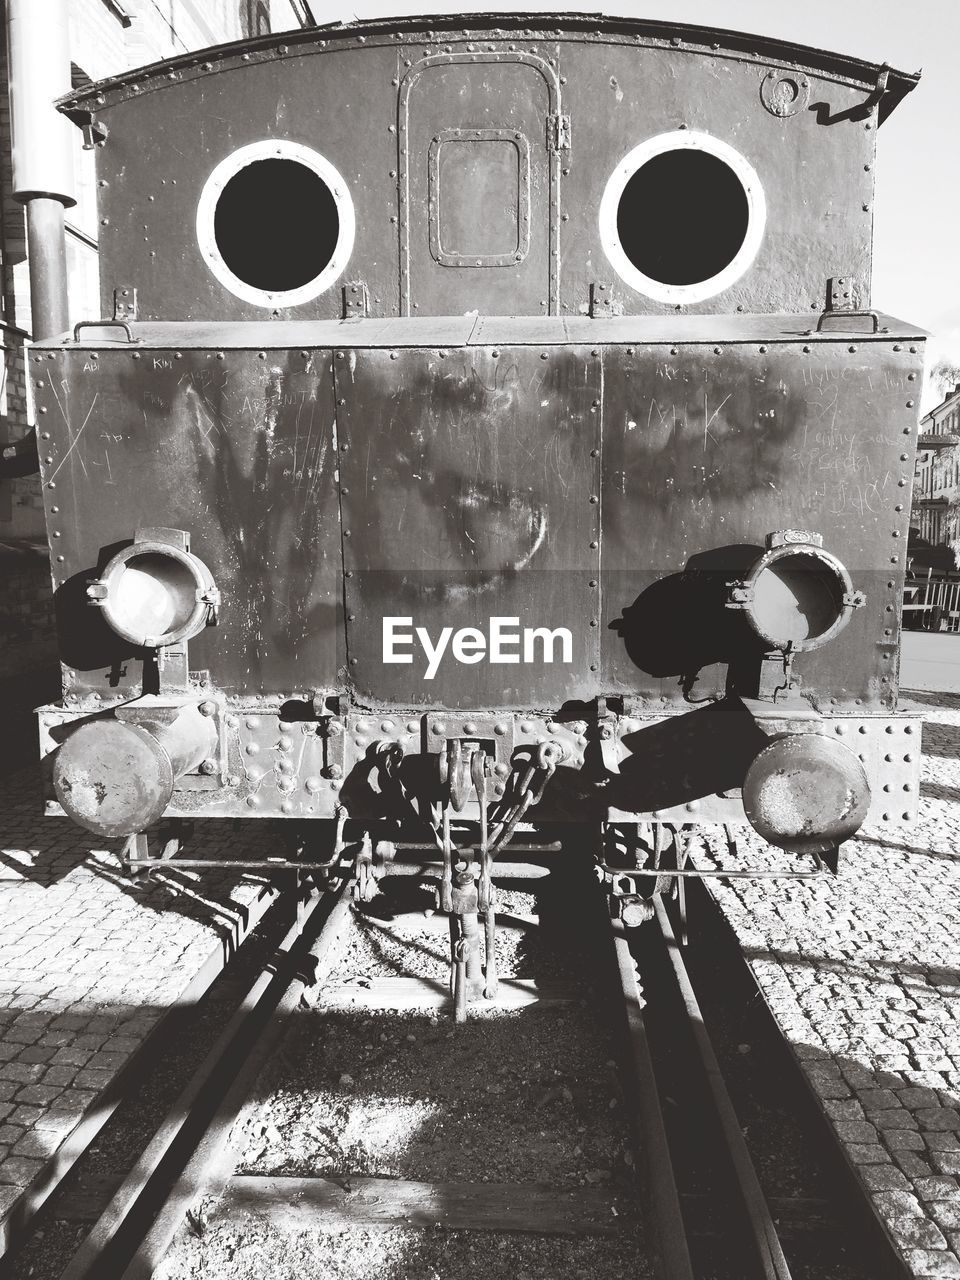 Old train bogie